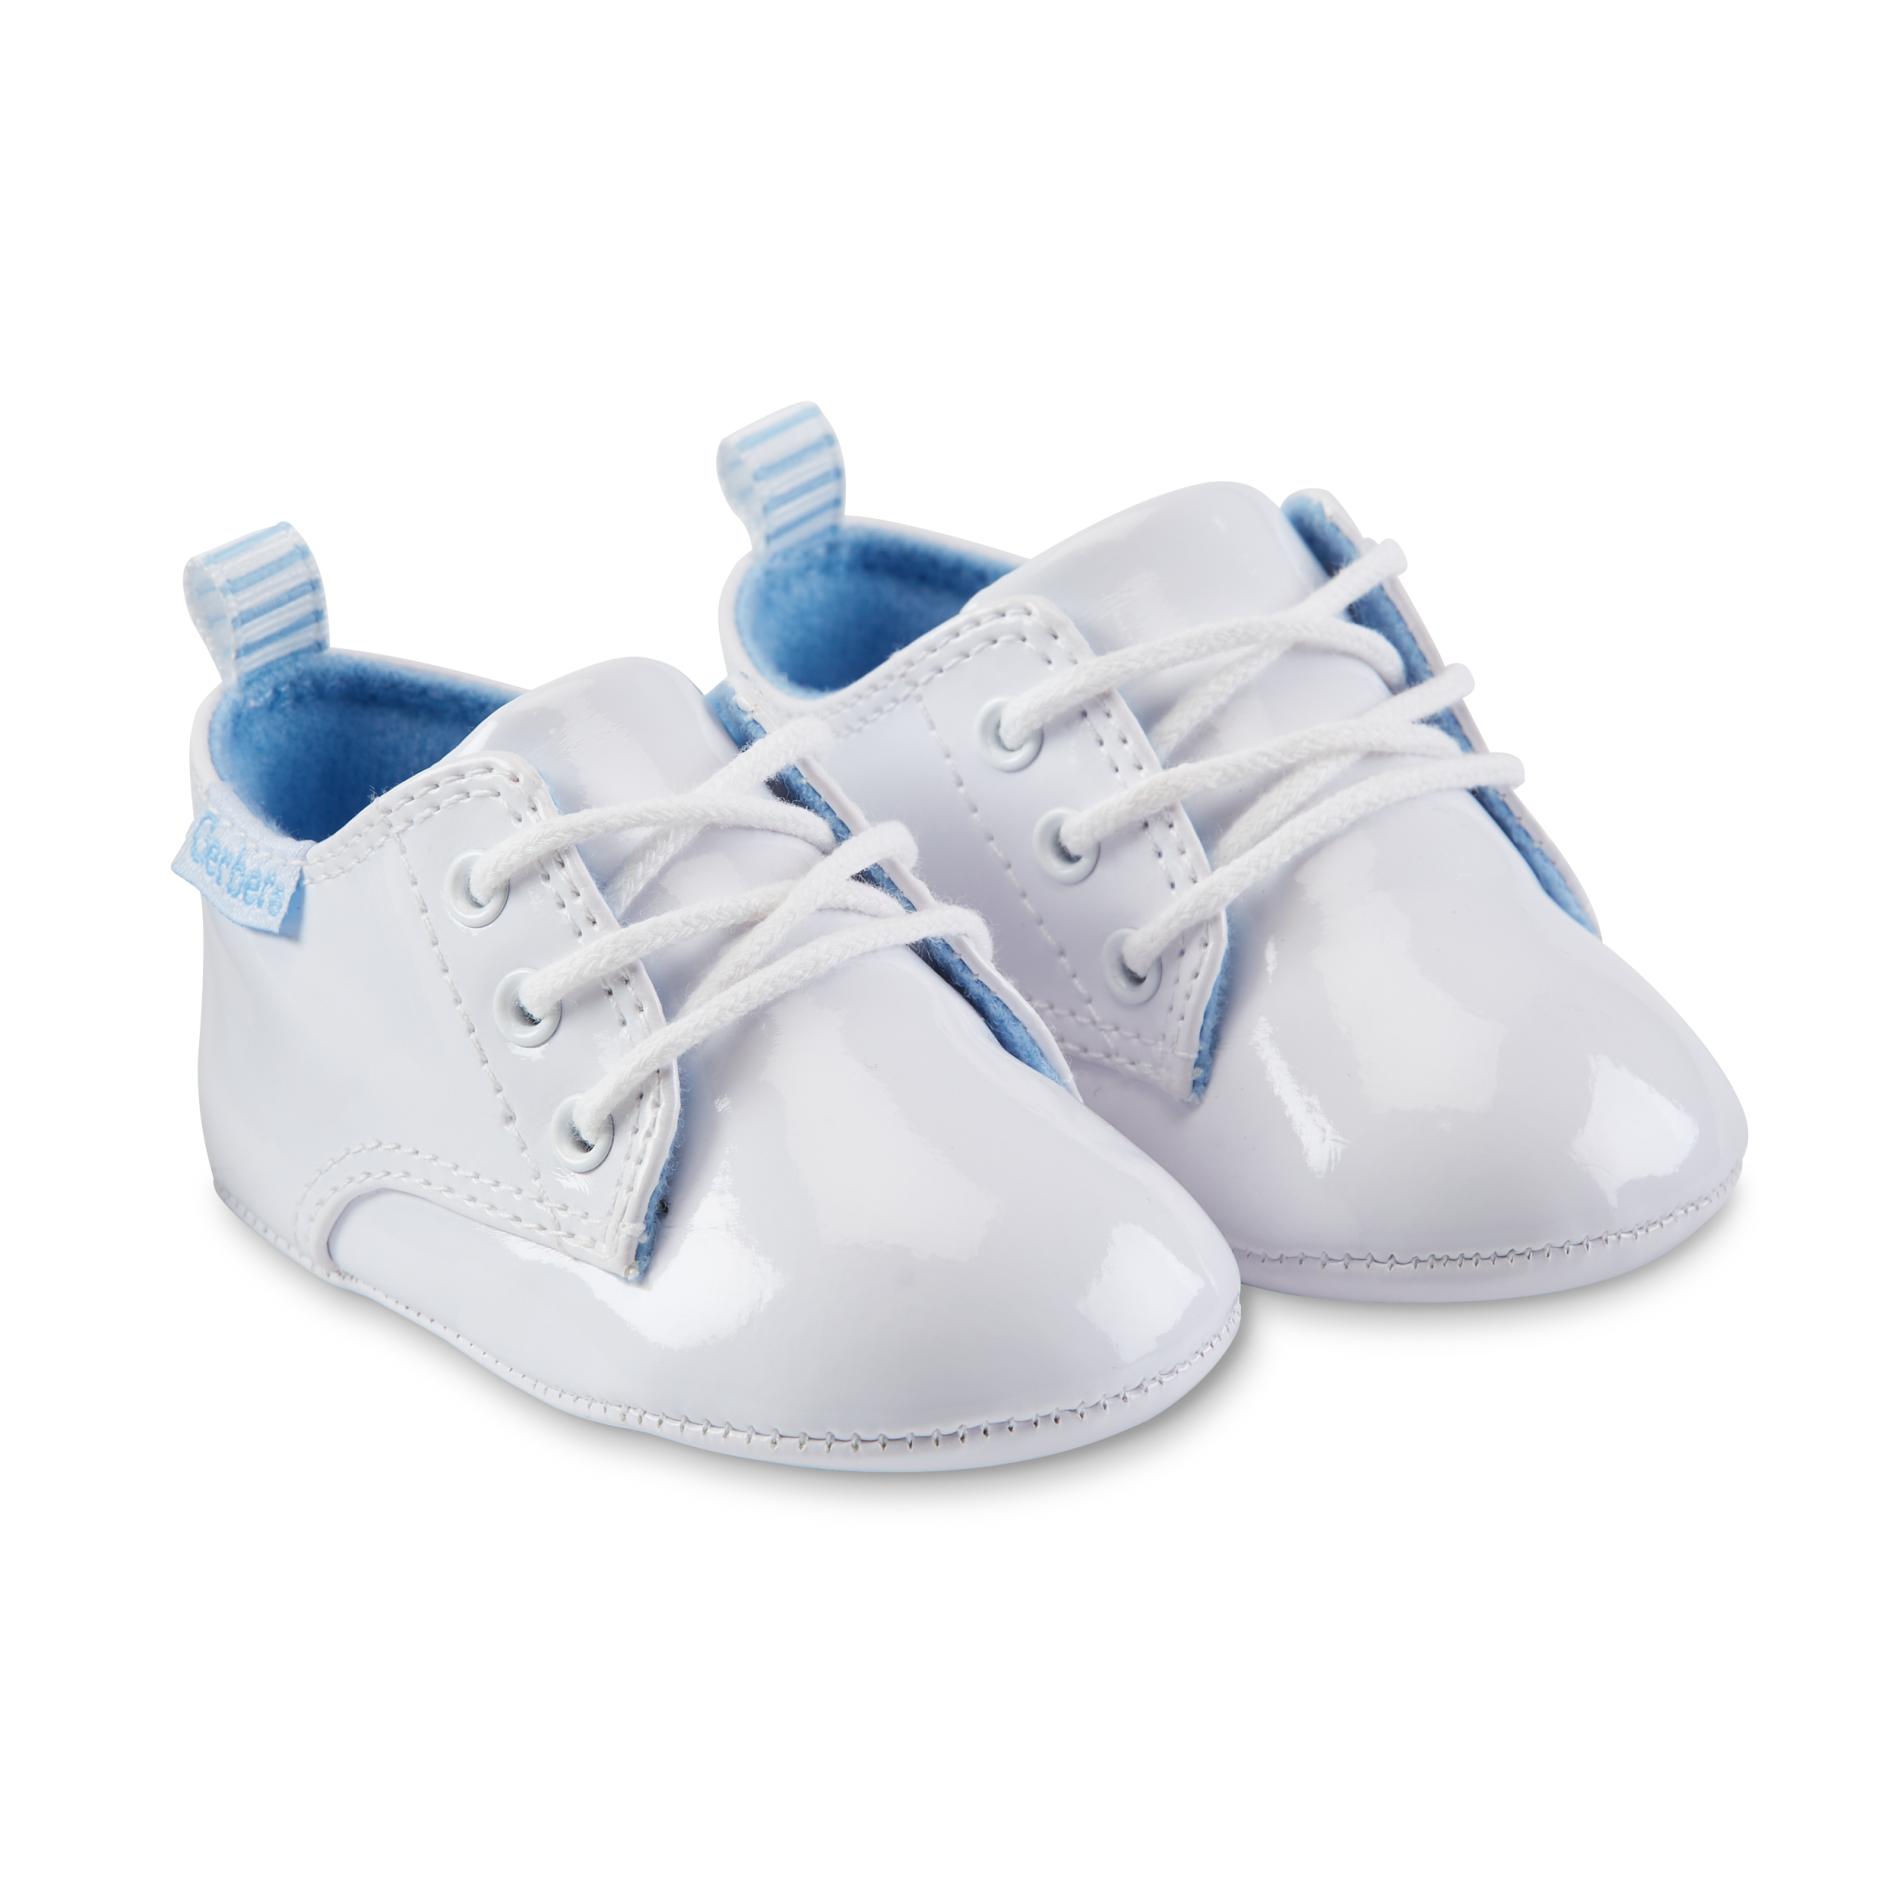 Gerber Baby Boy's White Dress Shoe